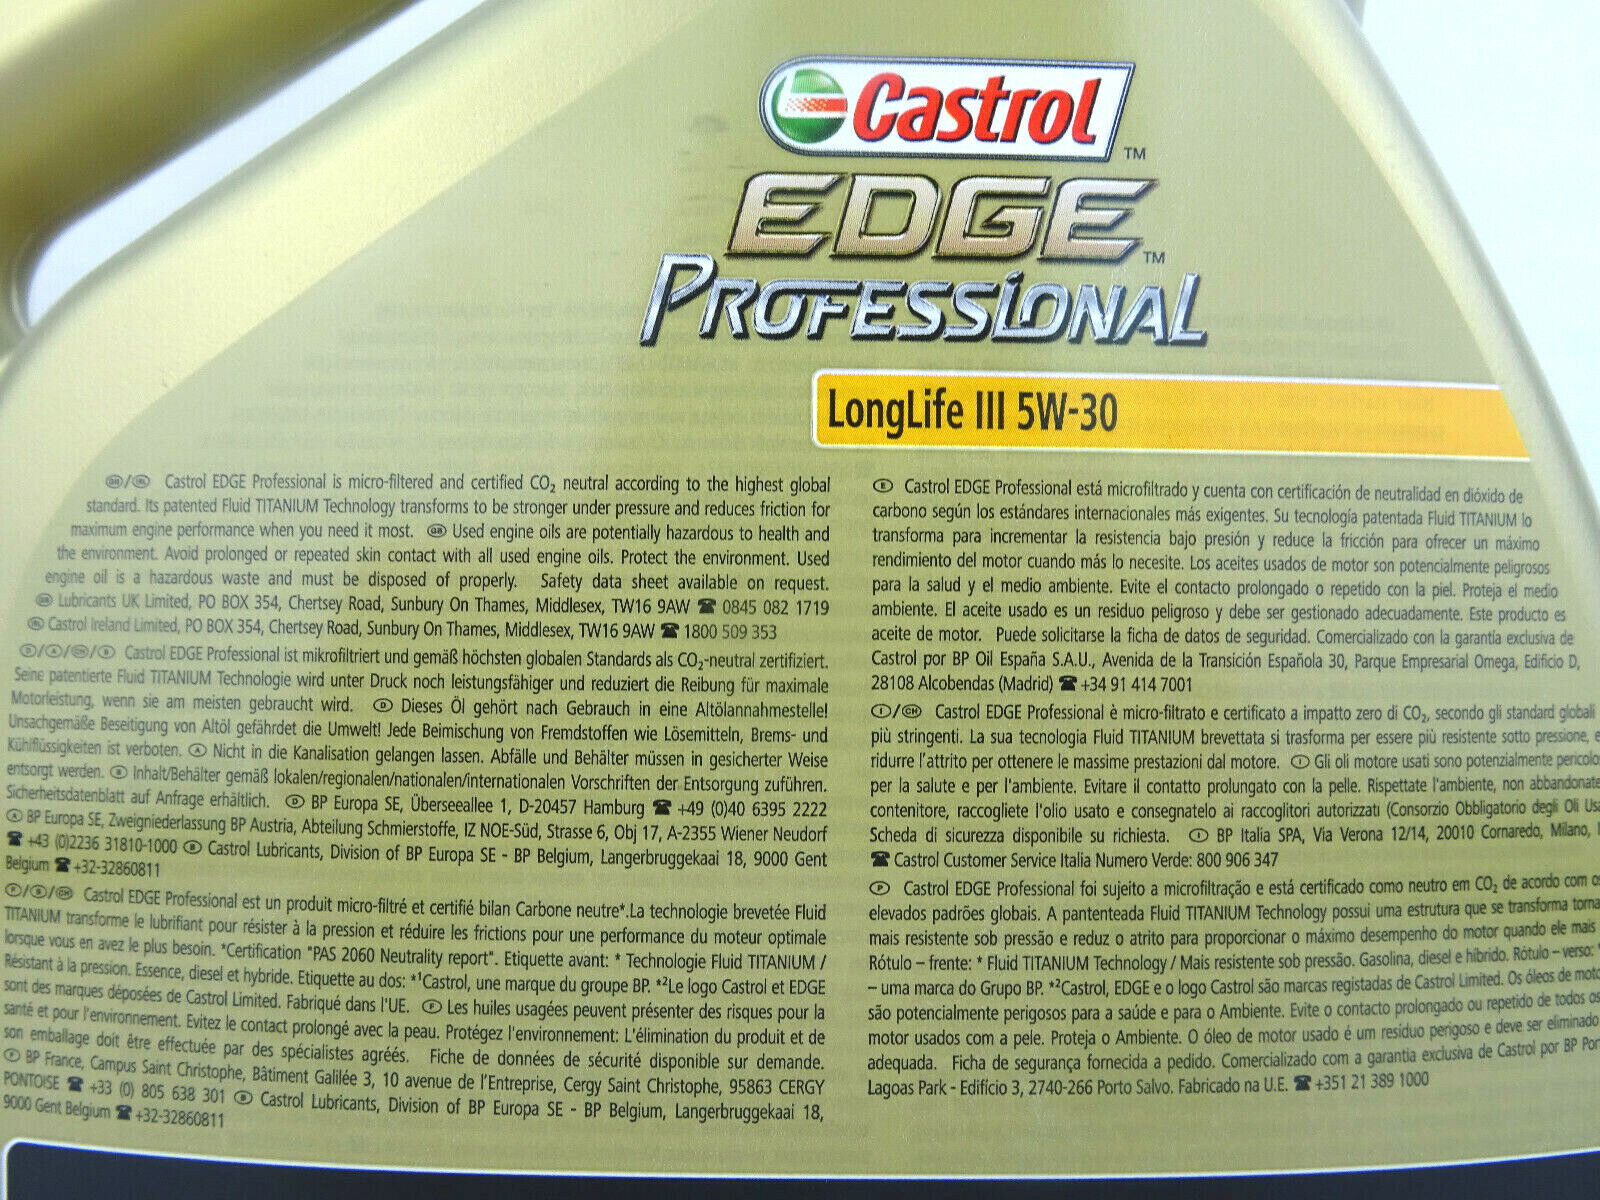 Castrol 5W30 Professional Longlife 3 5W-30 Edge ÖL VW 50400 50700 4Liter NEU